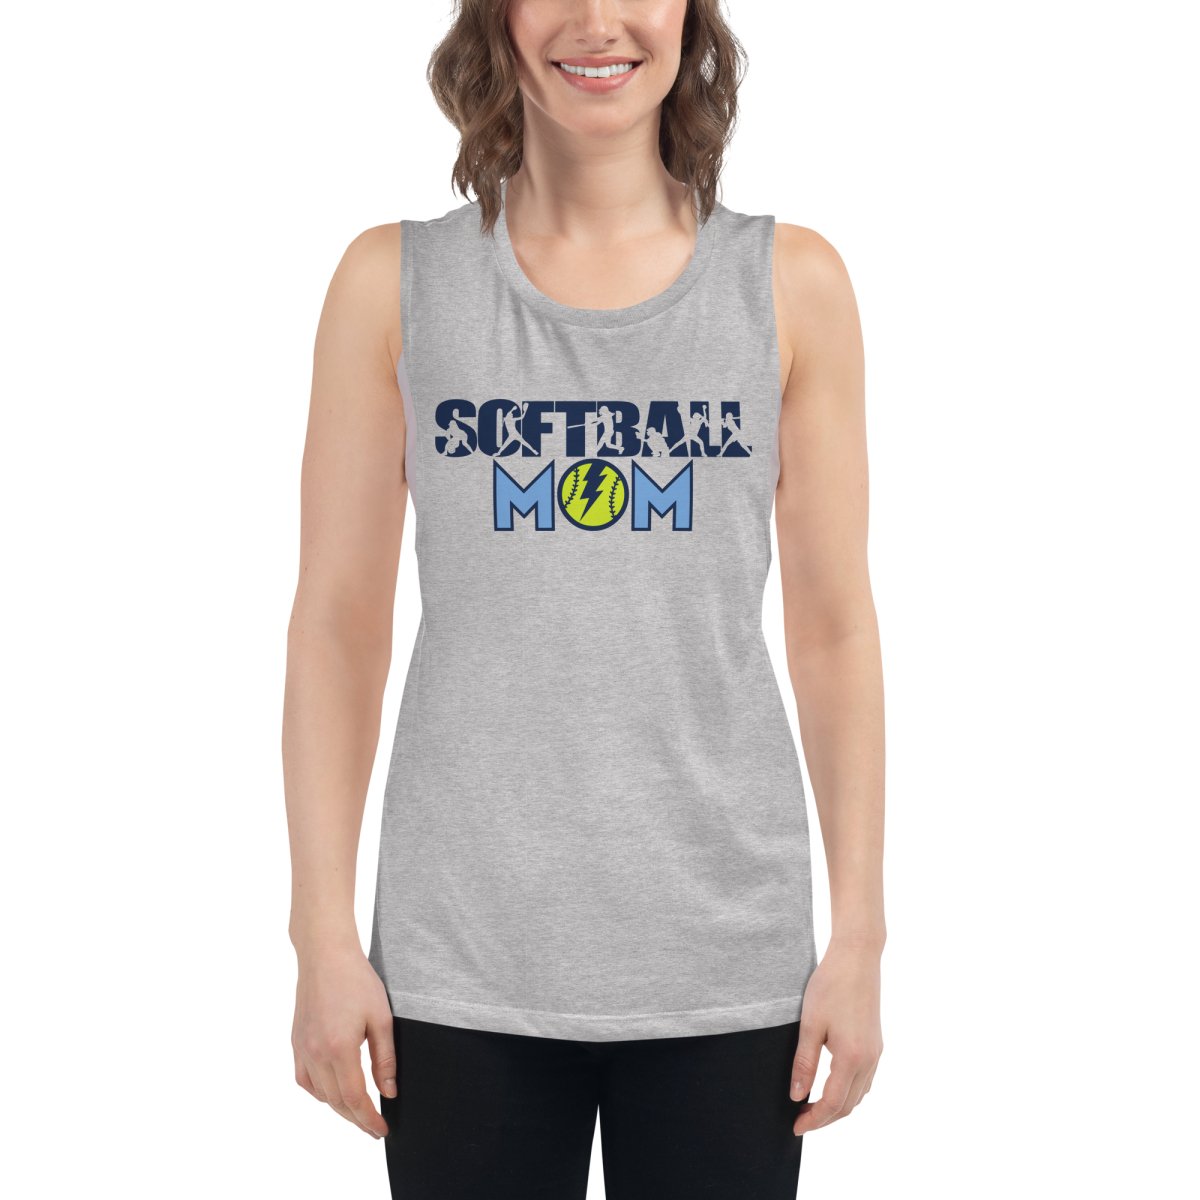 Storm Softball Mom Ladies’ Muscle Tank